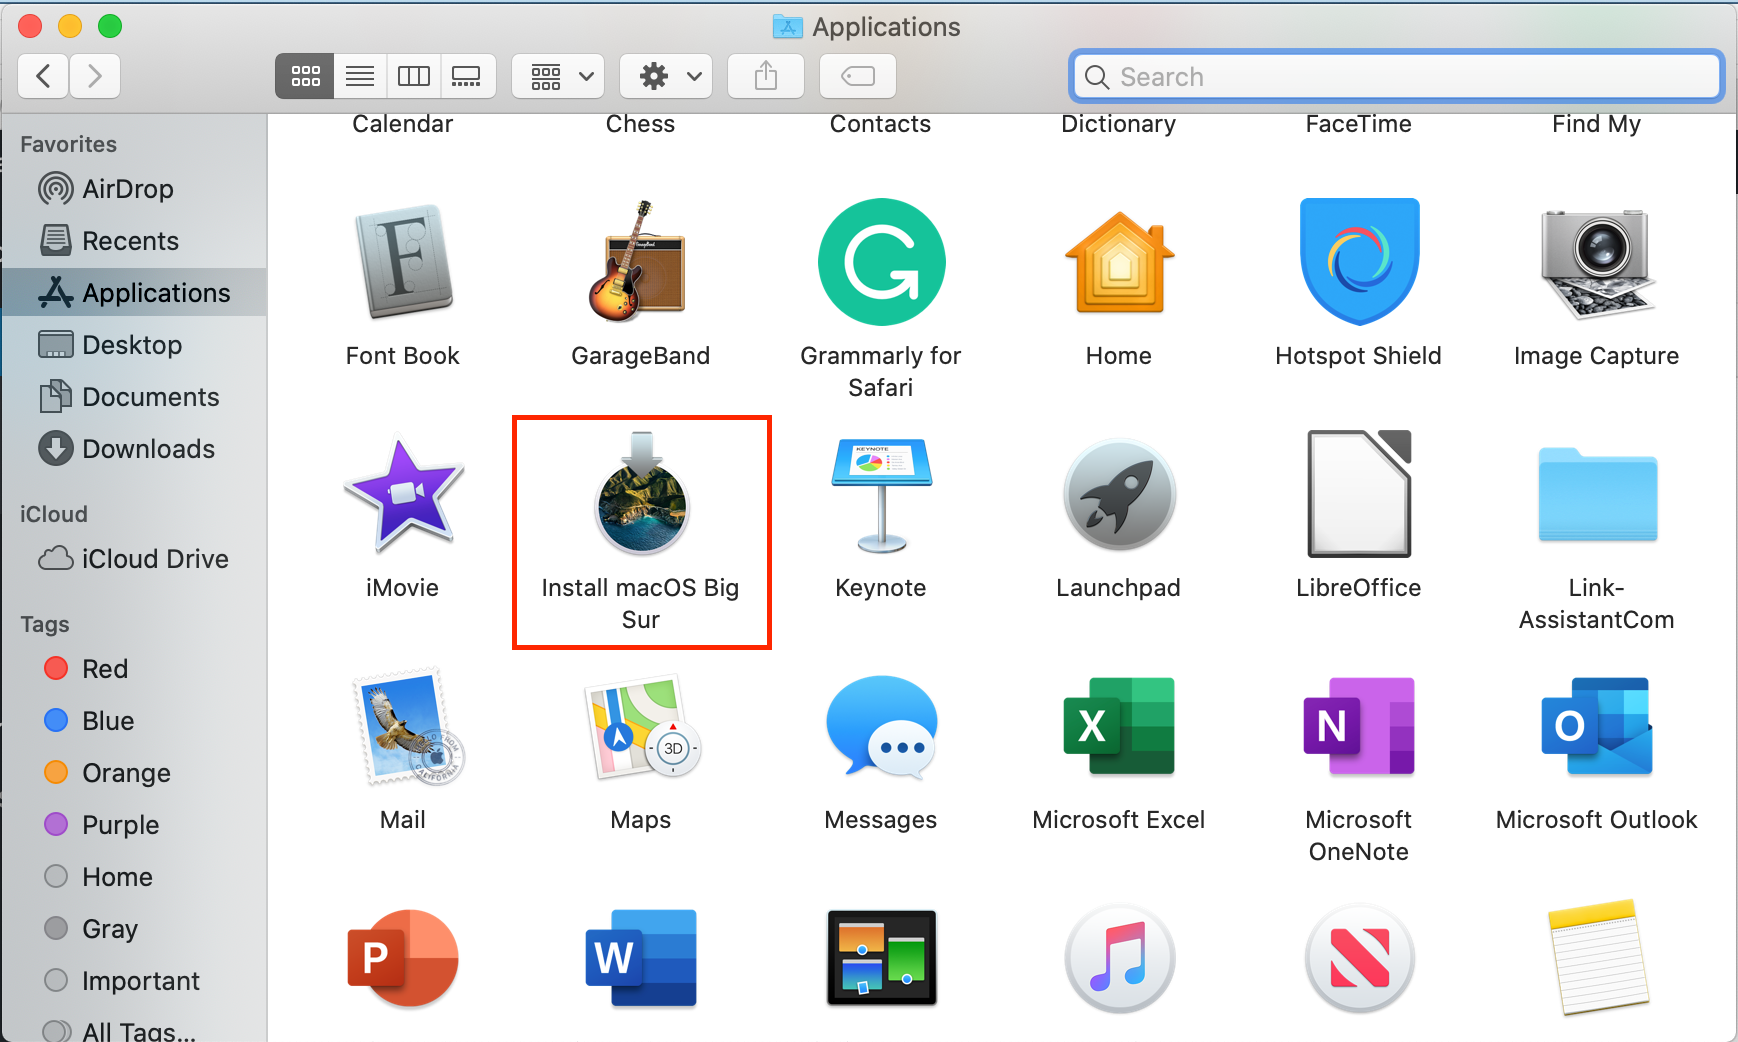 install macOS Big Sur app in the Applications folder